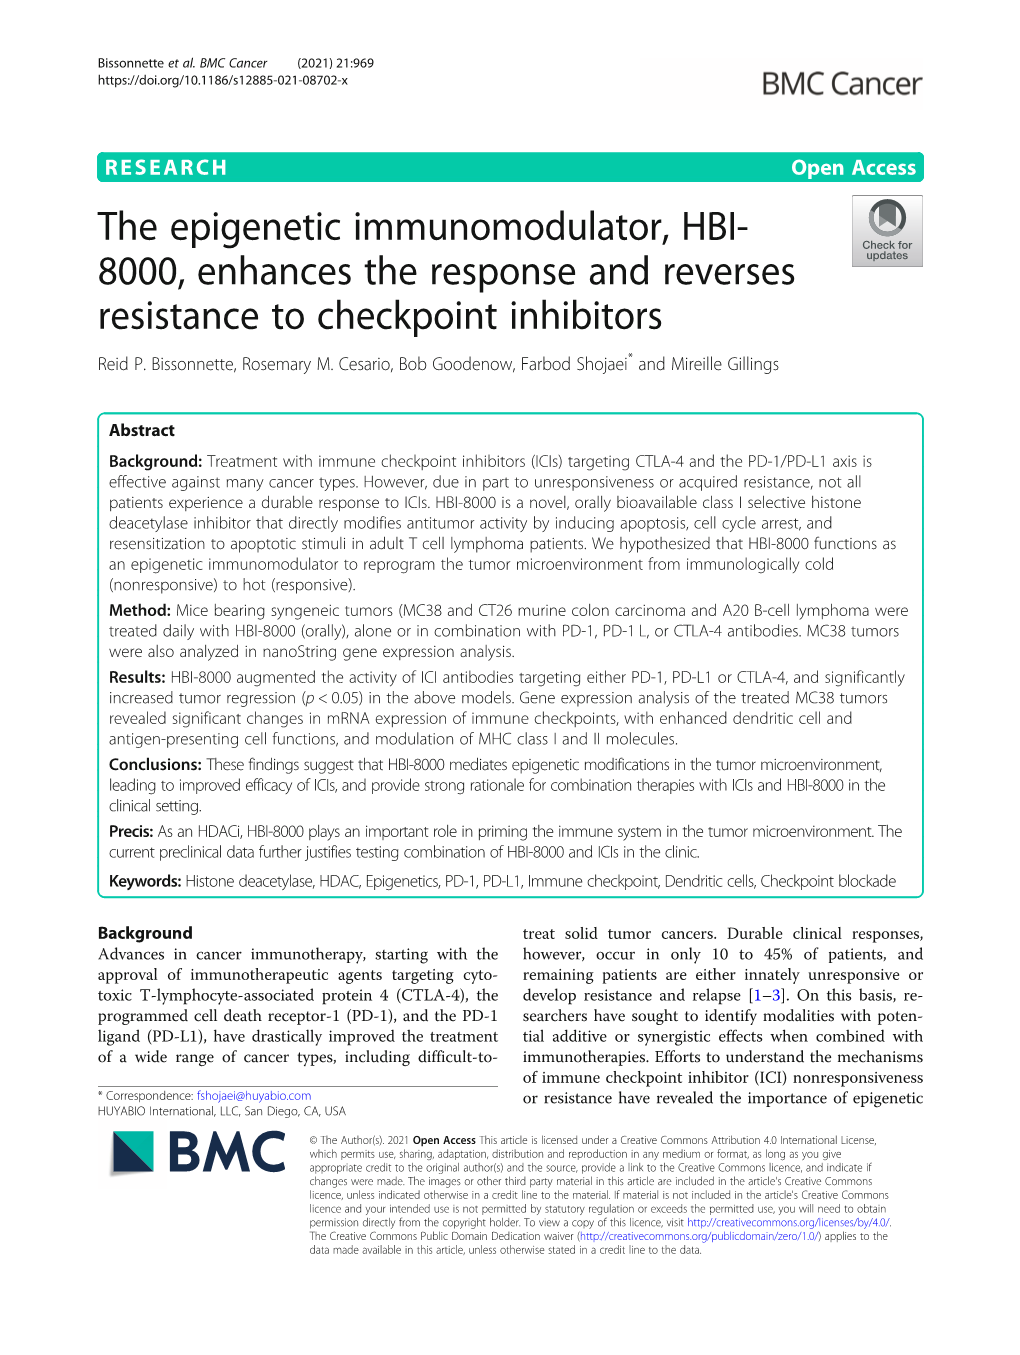 The Epigenetic Immunomodulator, HBI-8000, Enhances the Response And